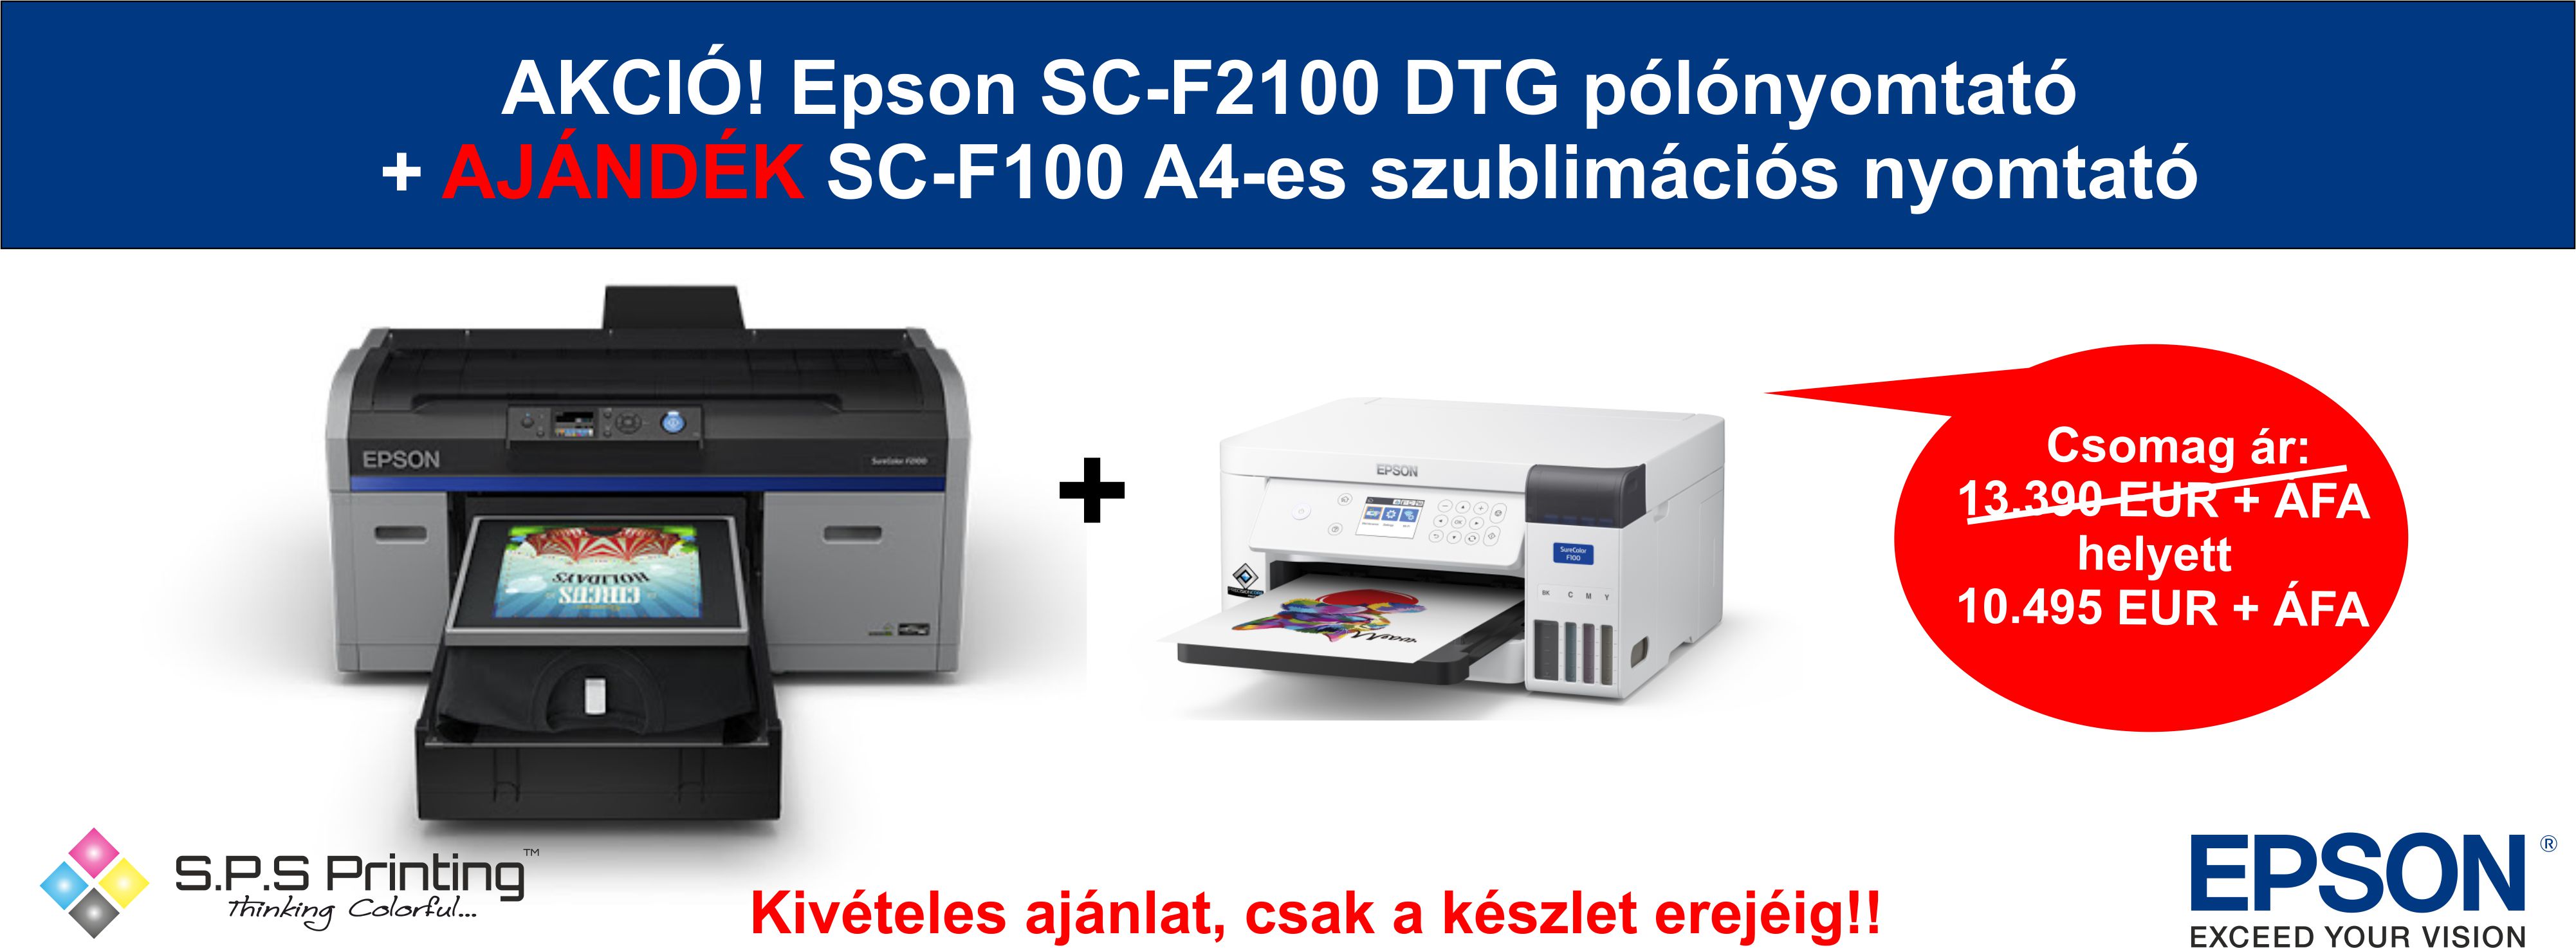 Epson SC-F2100 + F100 akció